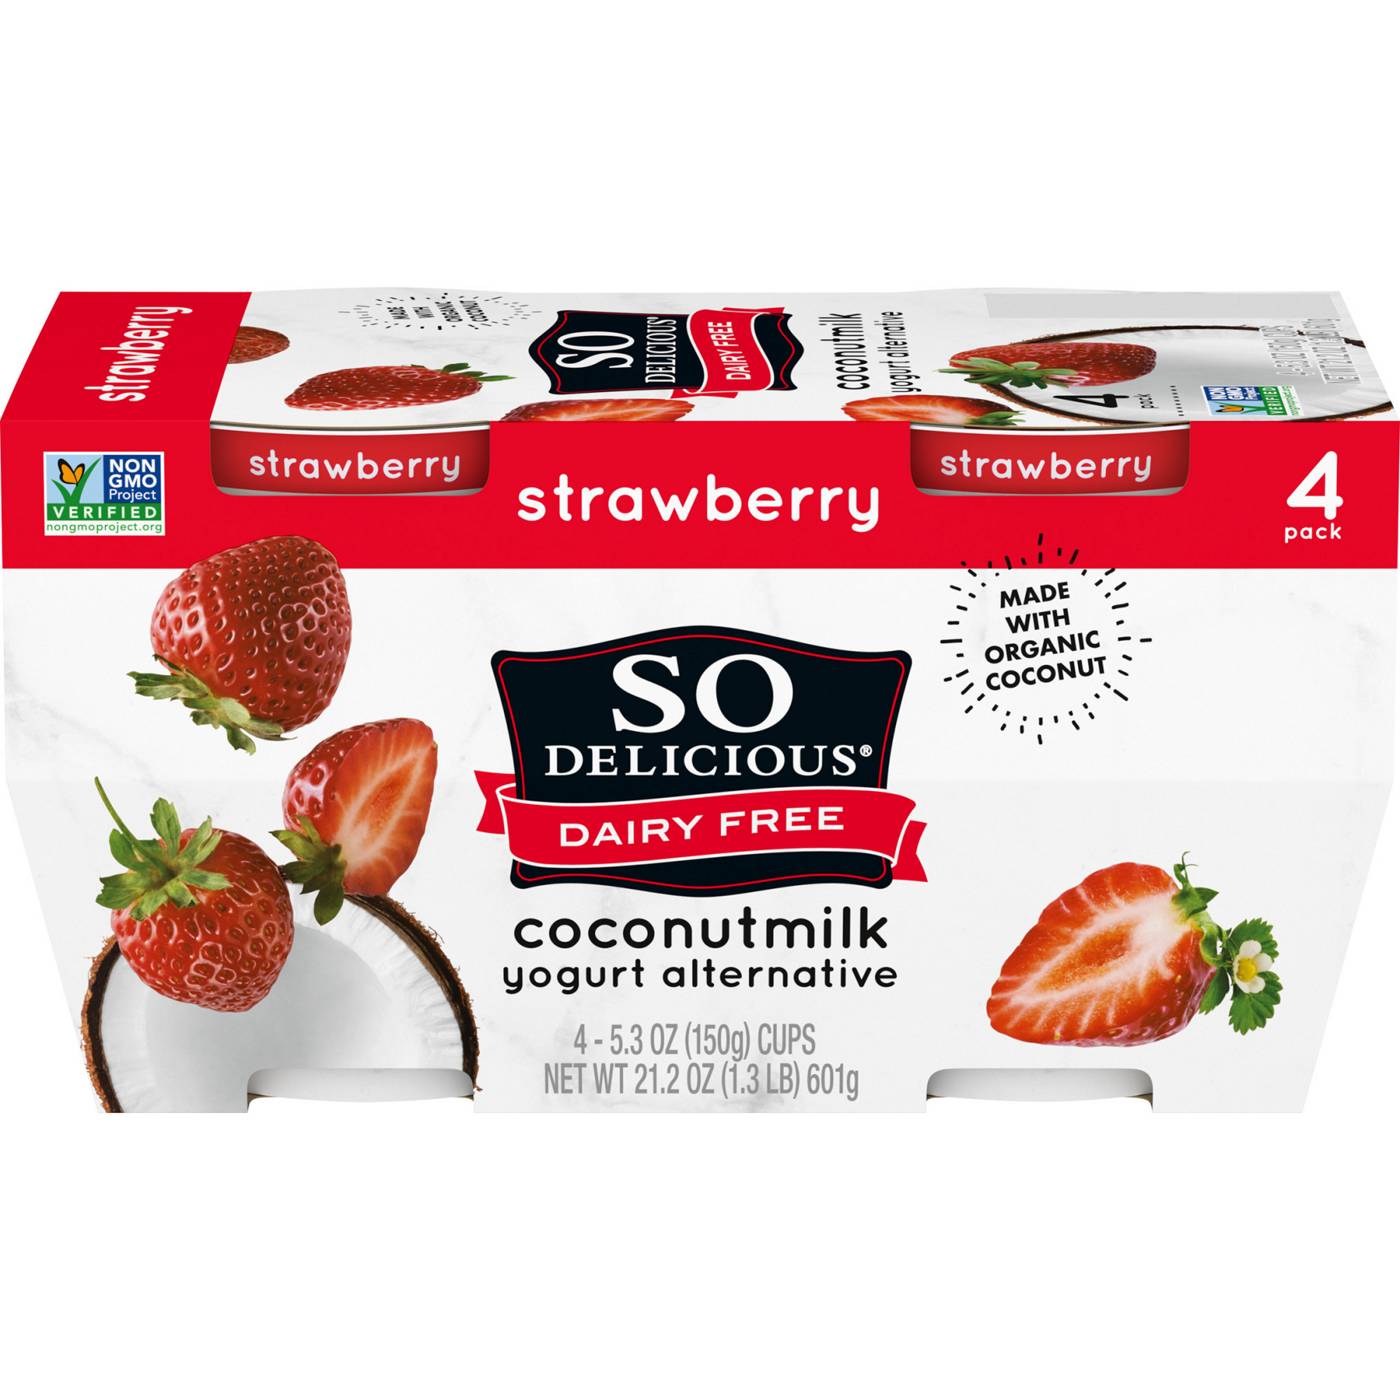 So Delicious Dairy Free Strawberry Coconutmilk Yogurt; image 1 of 3